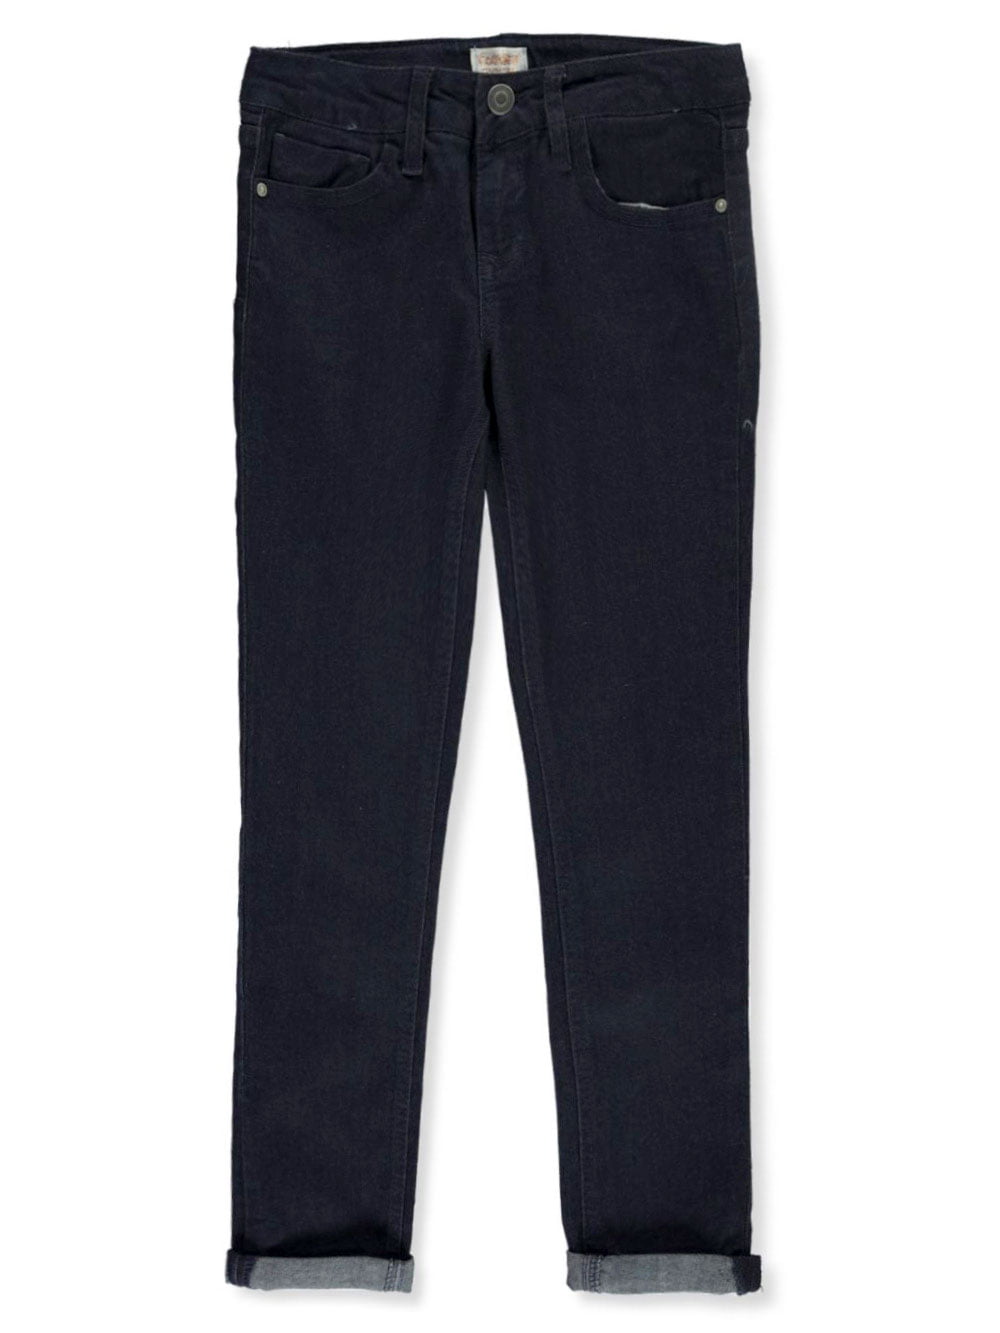 Cookie's Brand Girls' Cuffed Jeans - black, 6x - Walmart.com